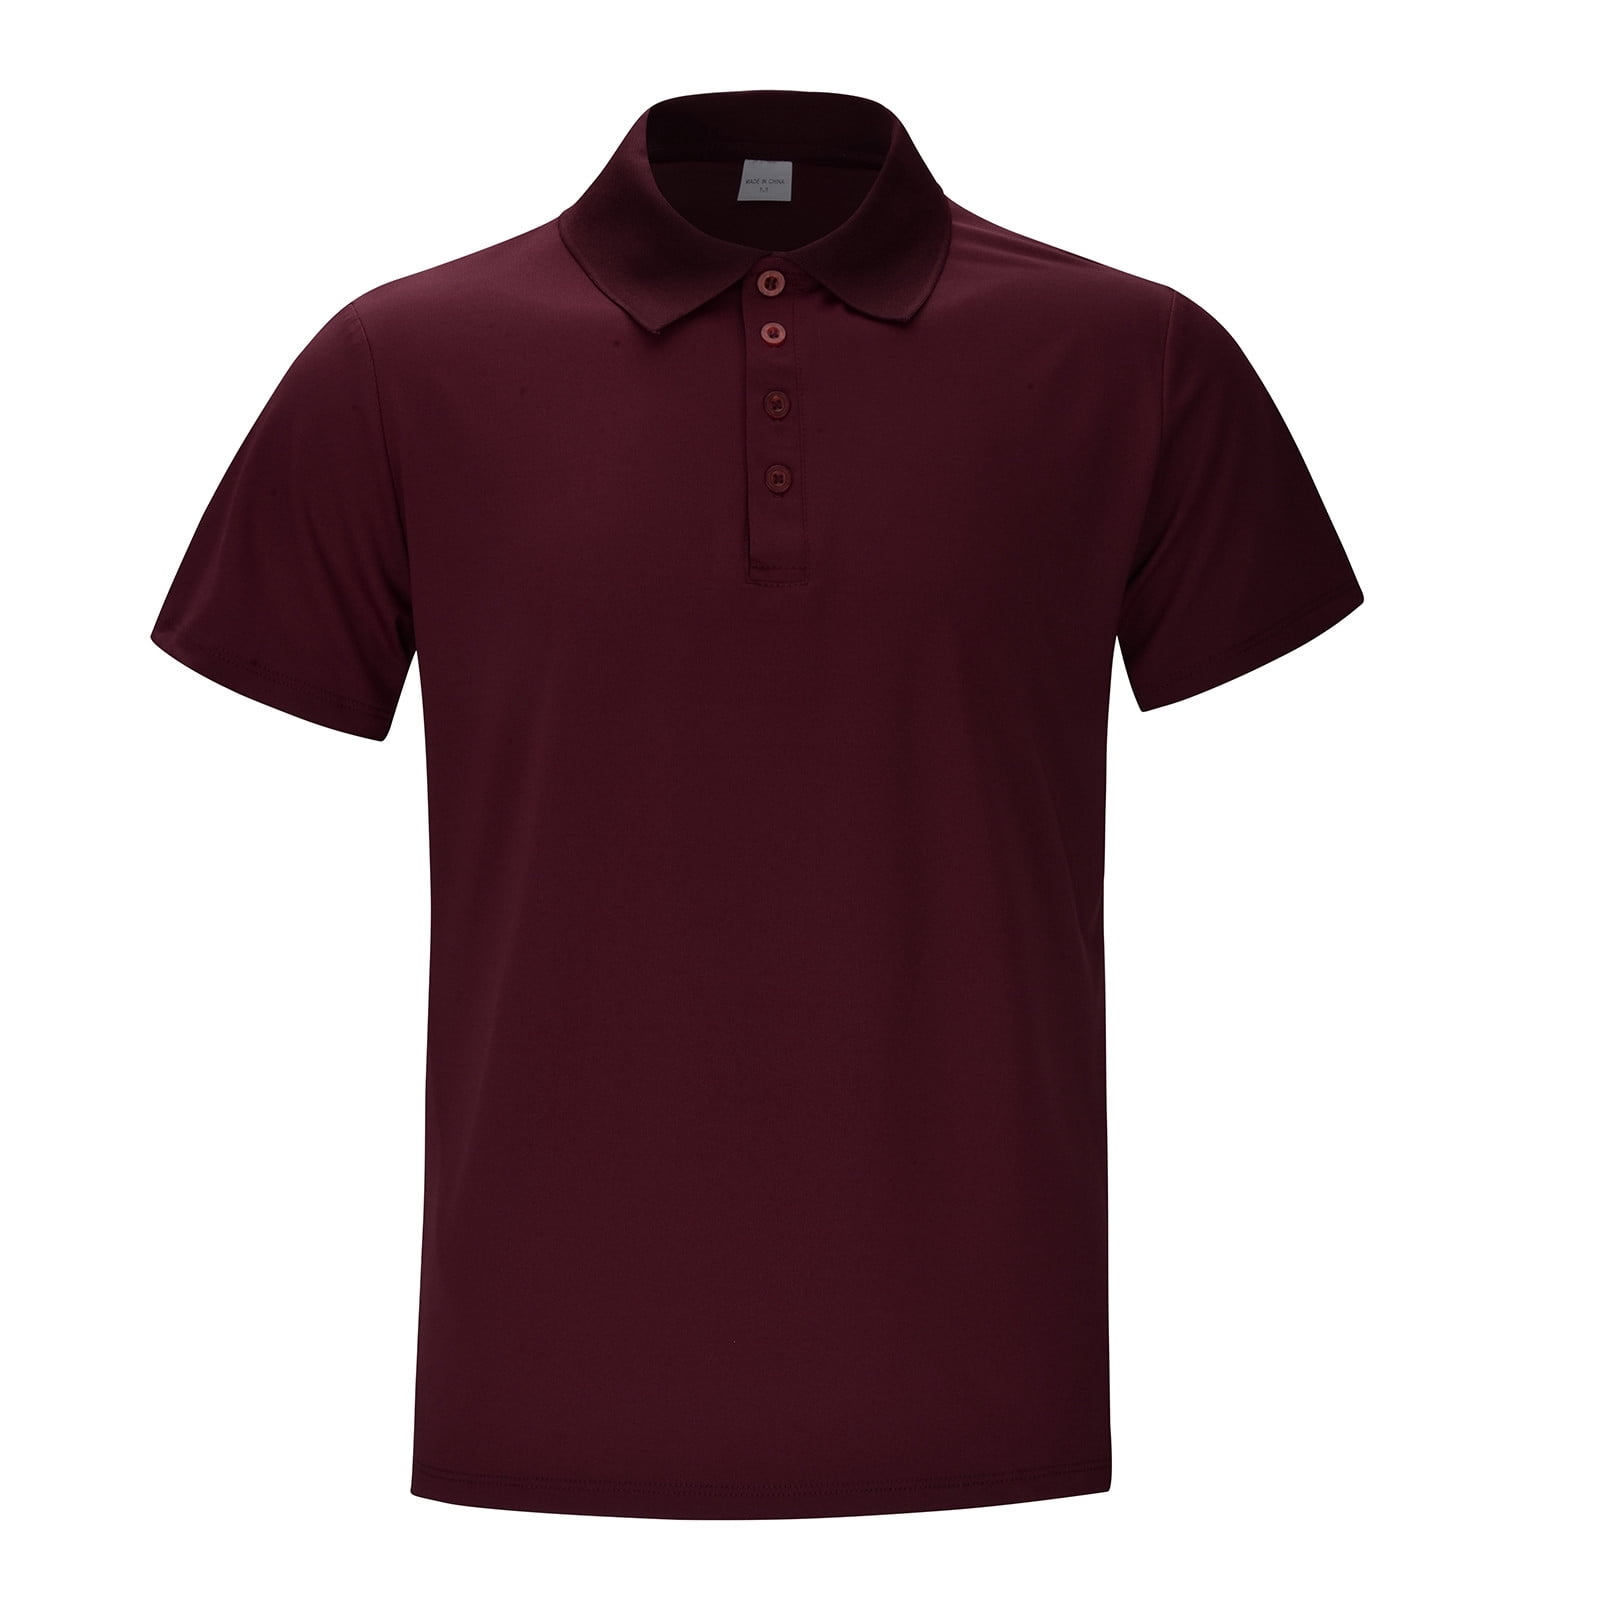 Rrunsv Golf Shirt for Men Mens Polo Shirts Short Sleeve Moisture ...